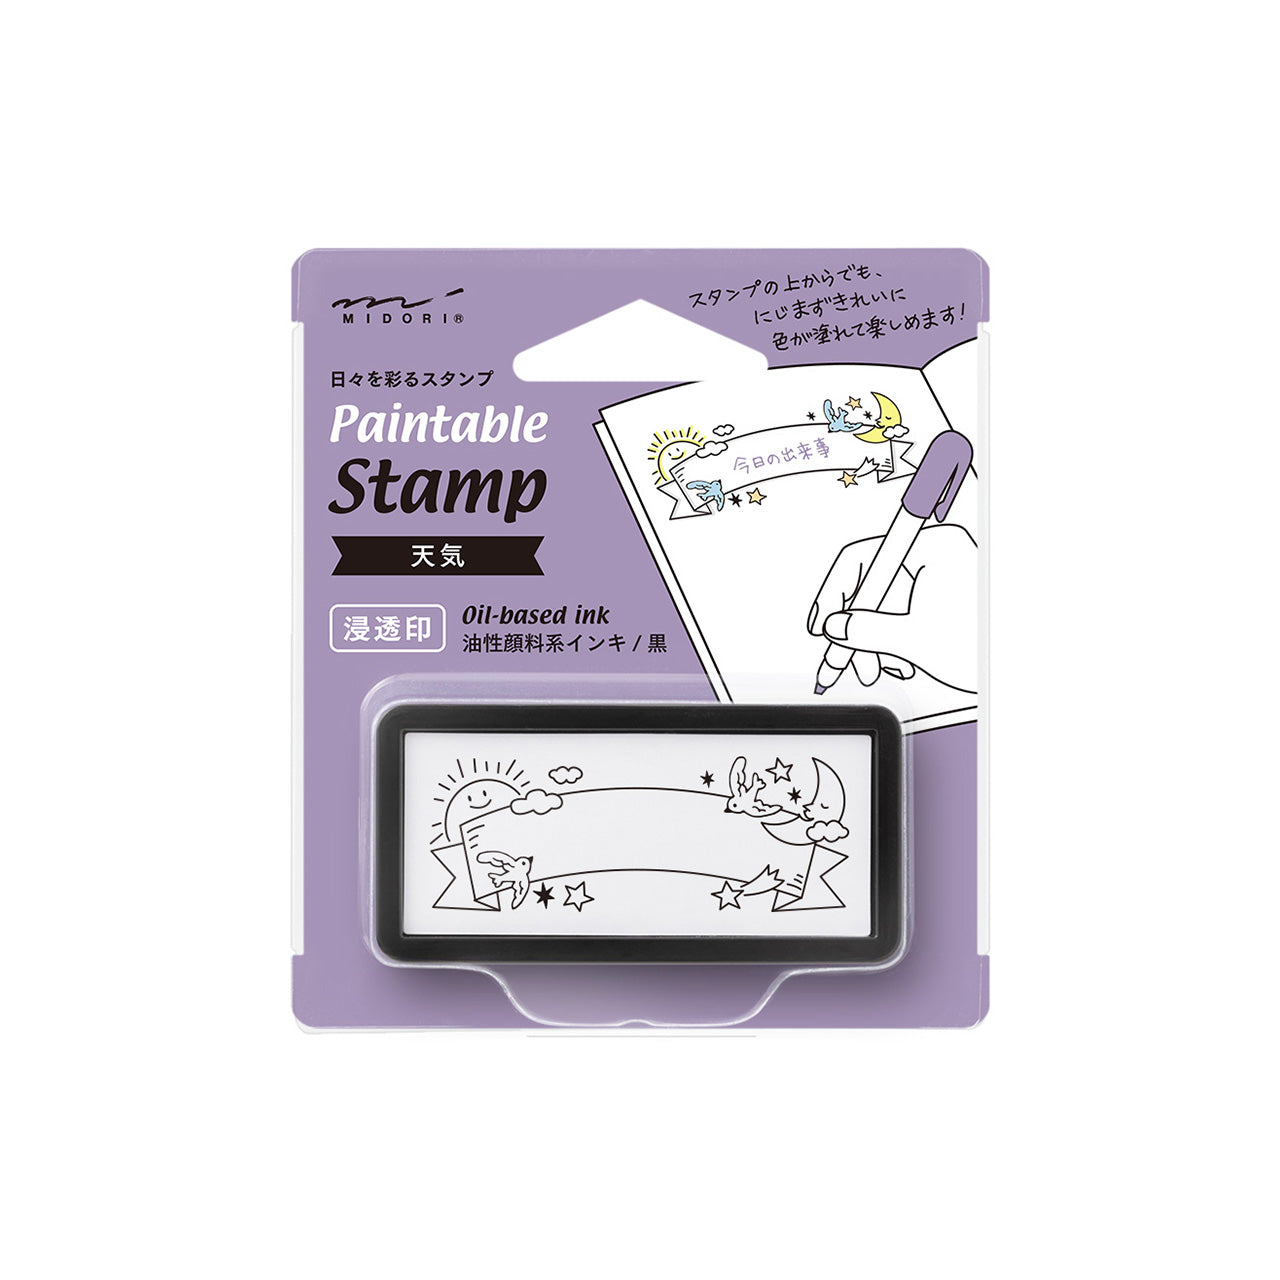 Midori Paintable Stamp Pre-Inked (Half-Size)